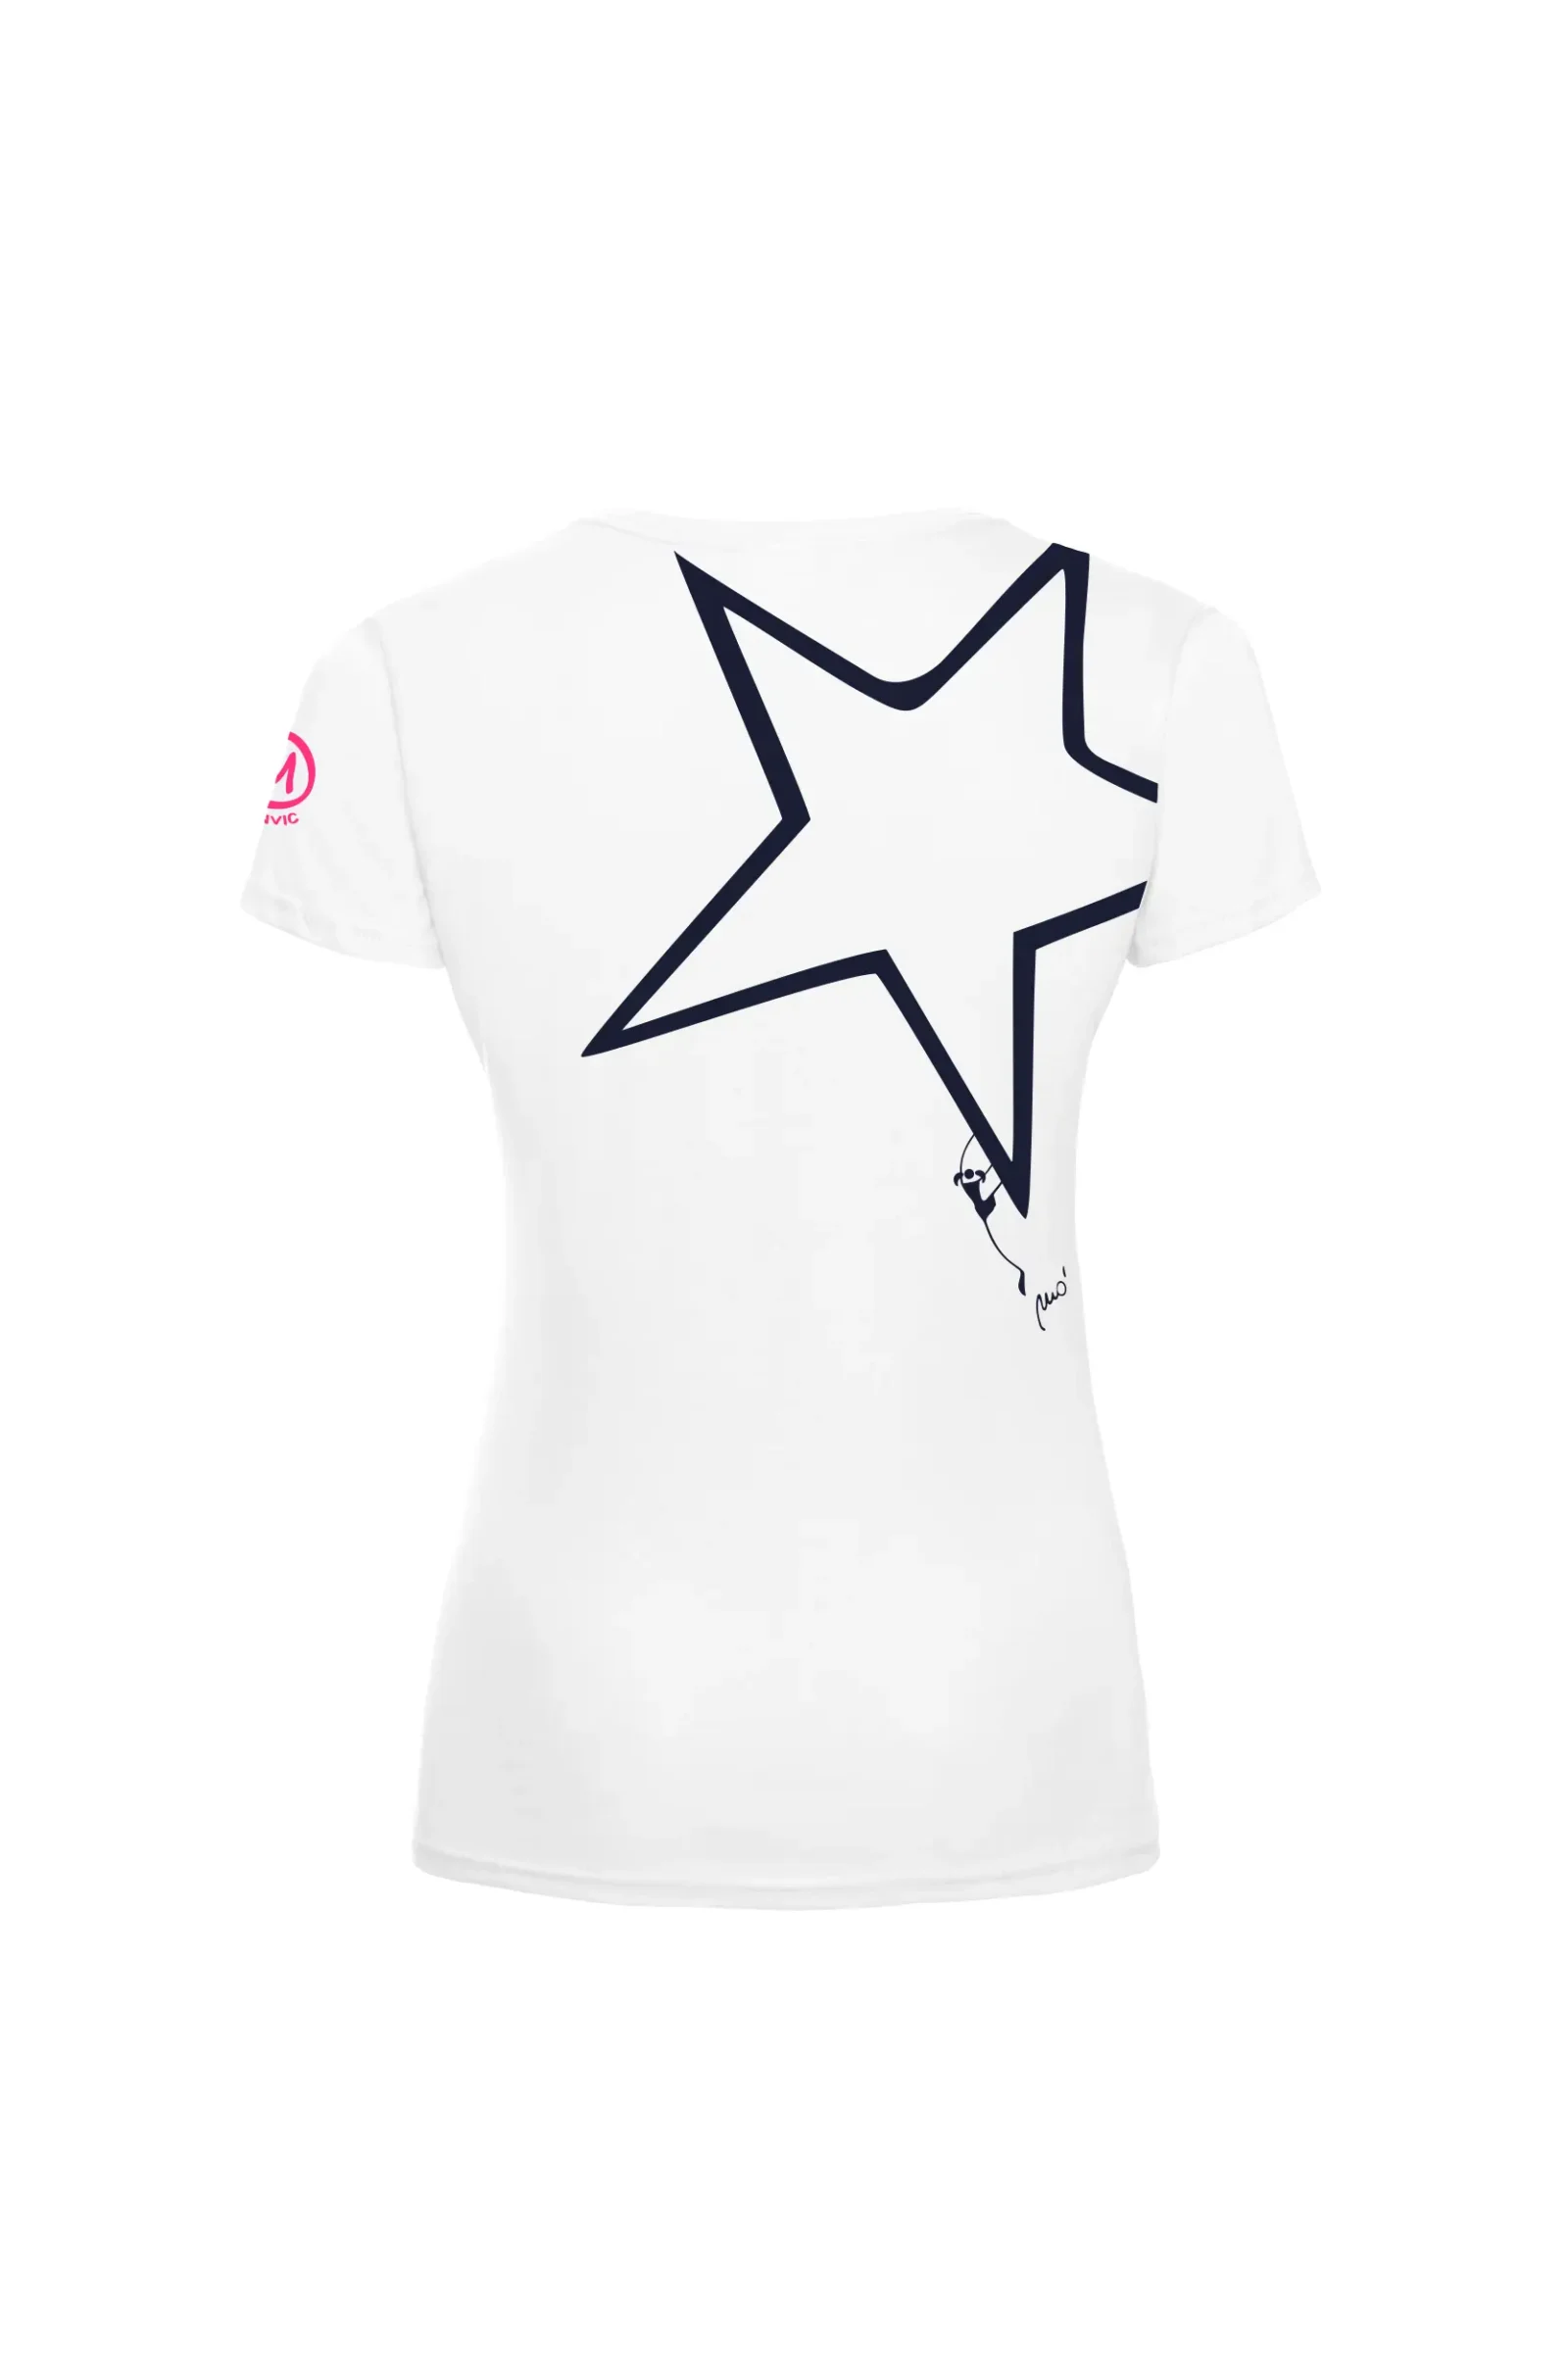 Women's climbing t-shirt - white cotton - "Superstar" graphics - SHARON MONVIC